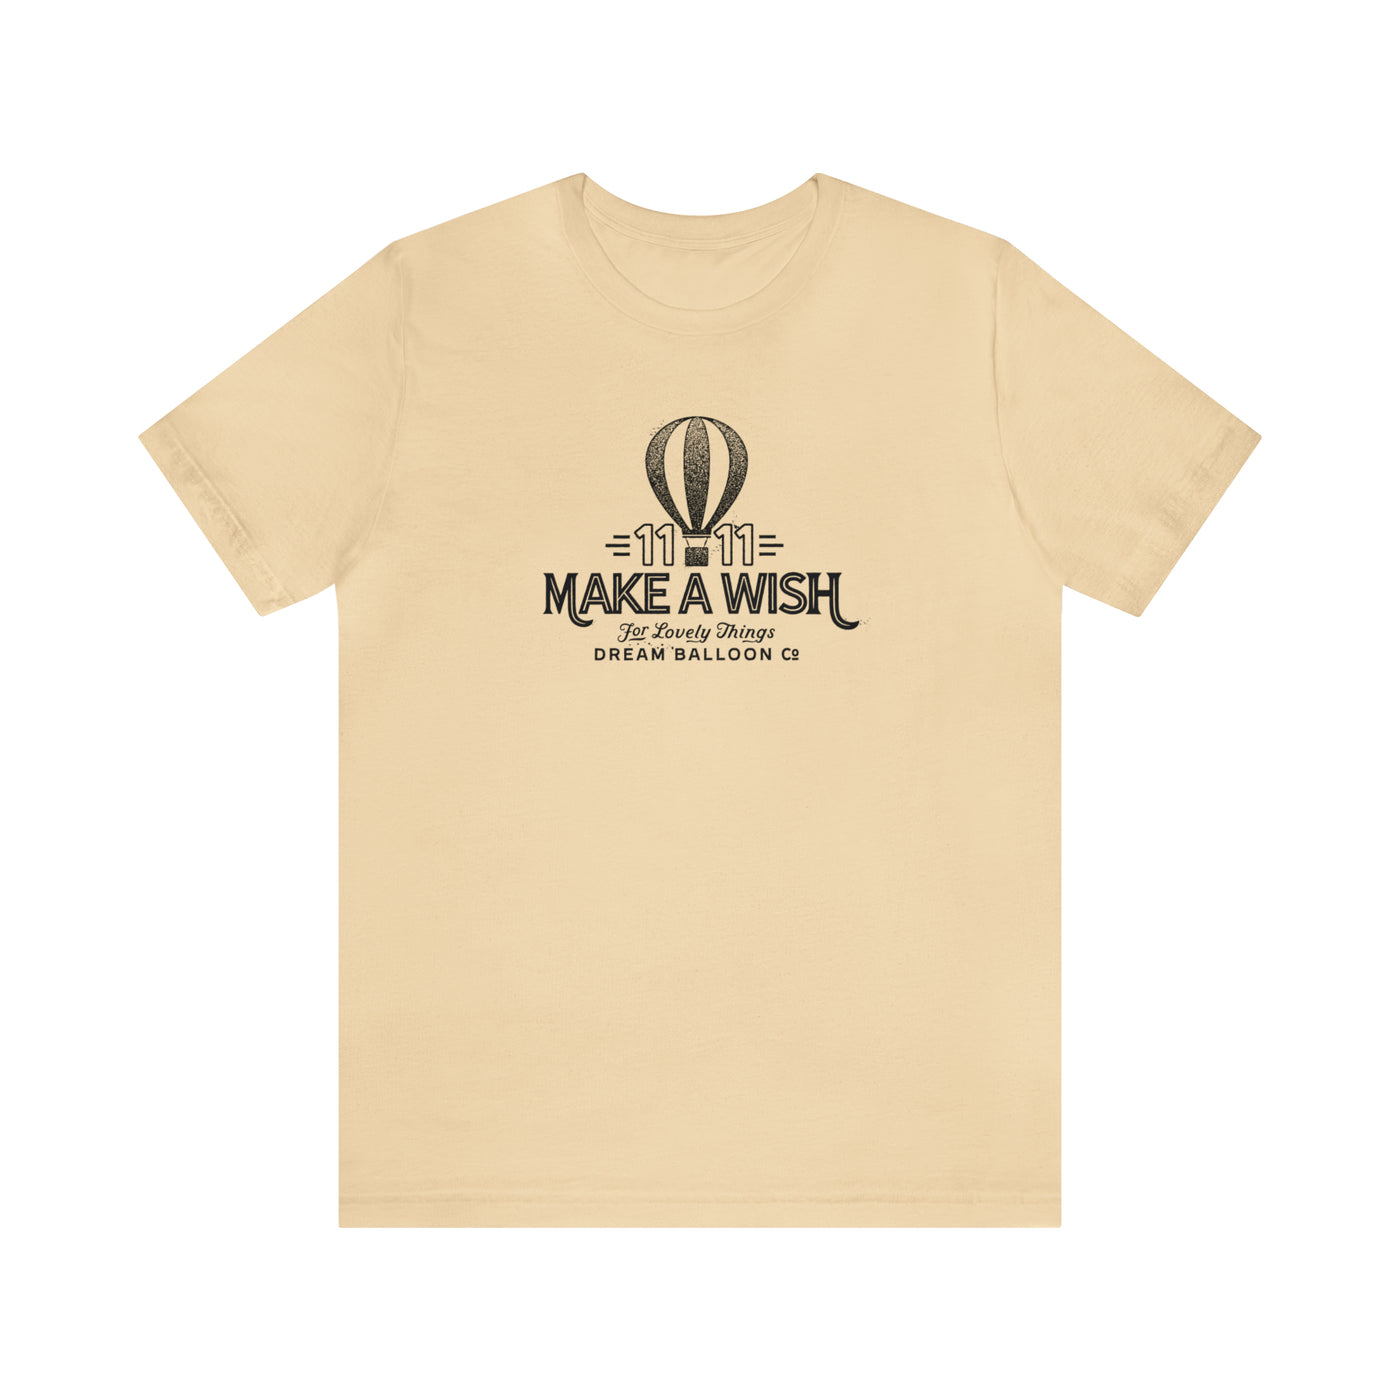 11:11 Make a Wish Air Balloon - Retro Vintage Style Logo T-shirt Tee